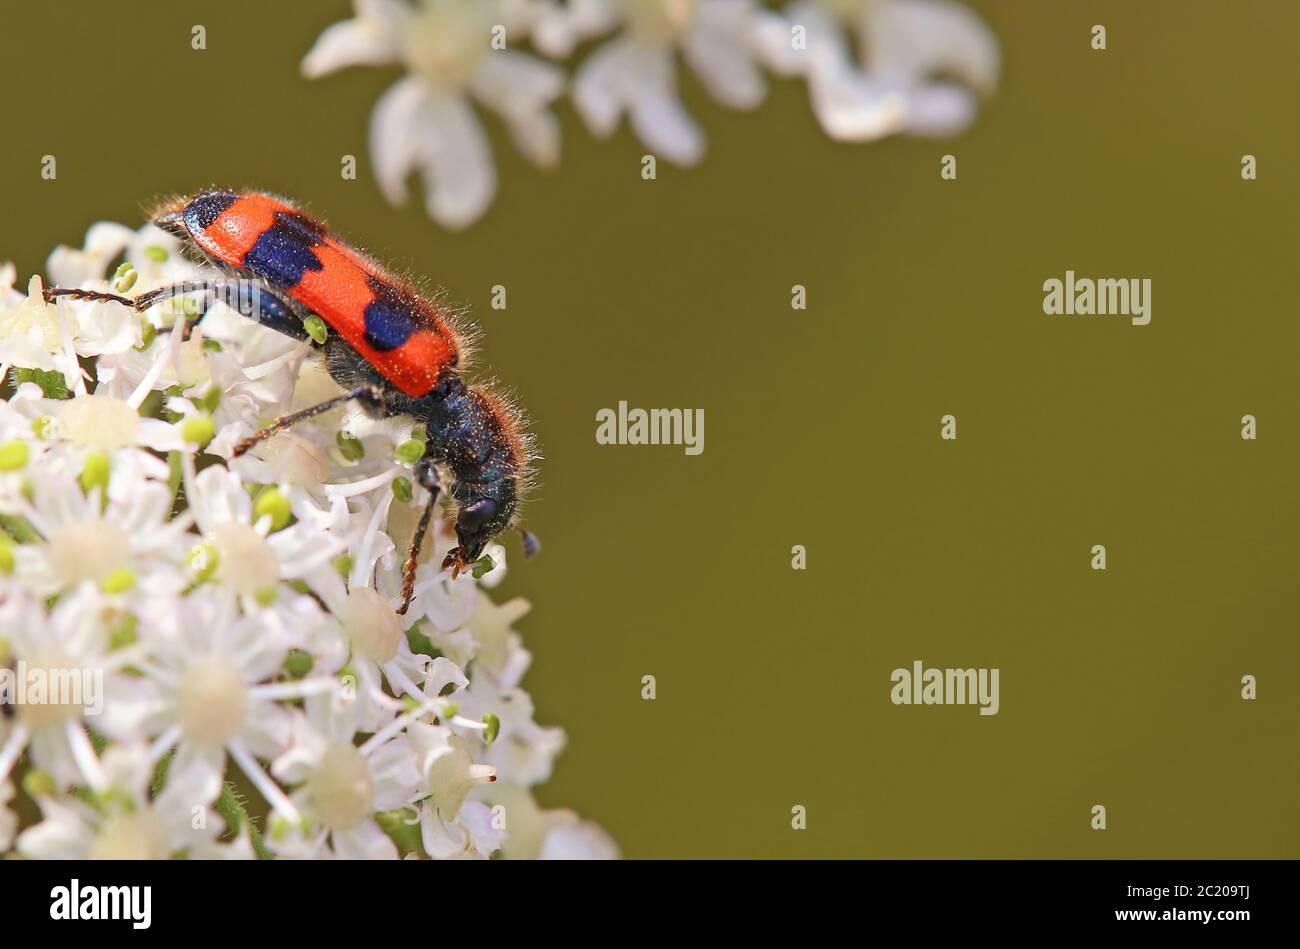 Red-black coloured beetle Trichodes apiarius Stock Photo